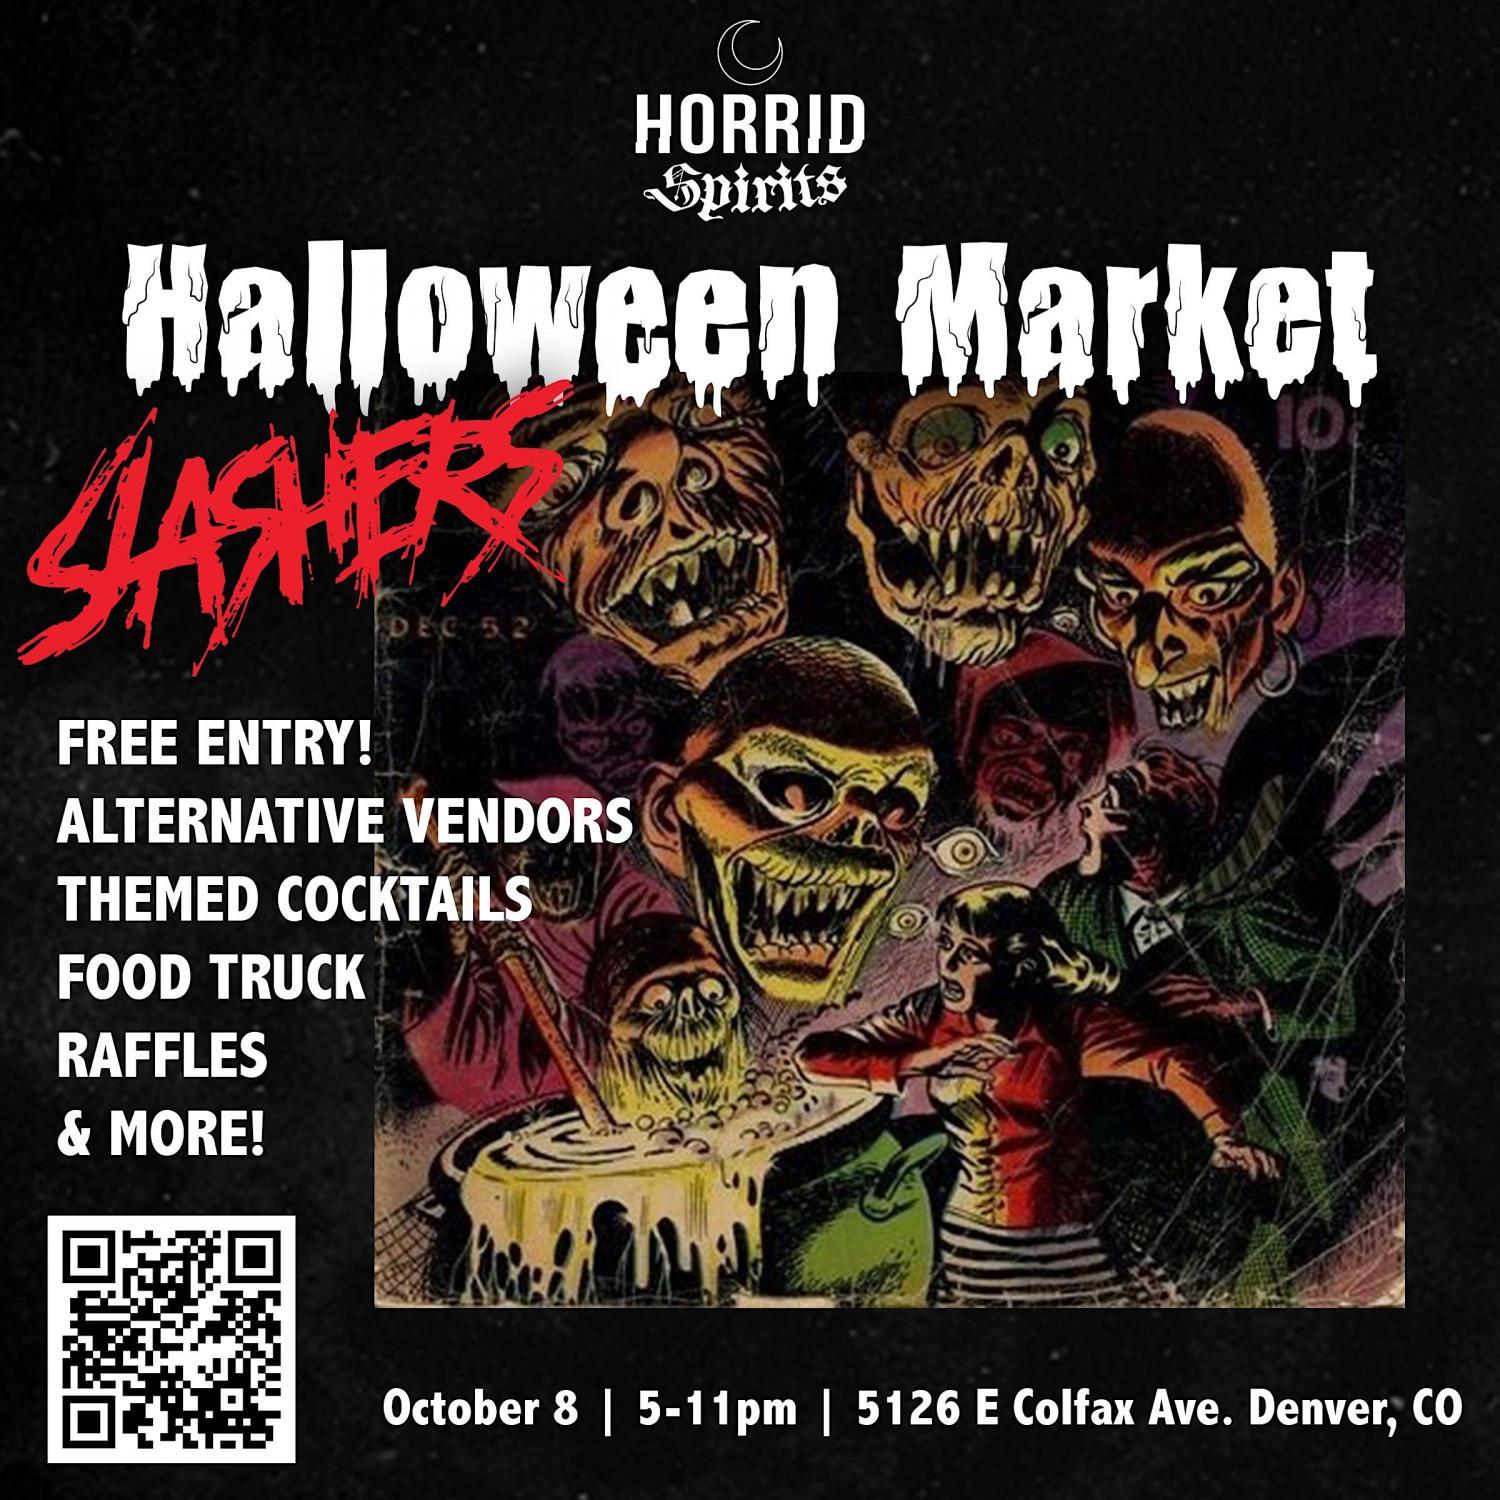 HORRID Halloween Market at Slashers!
Sat Oct 8, 4:00 PM - Sat Oct 8, 9:00 PM